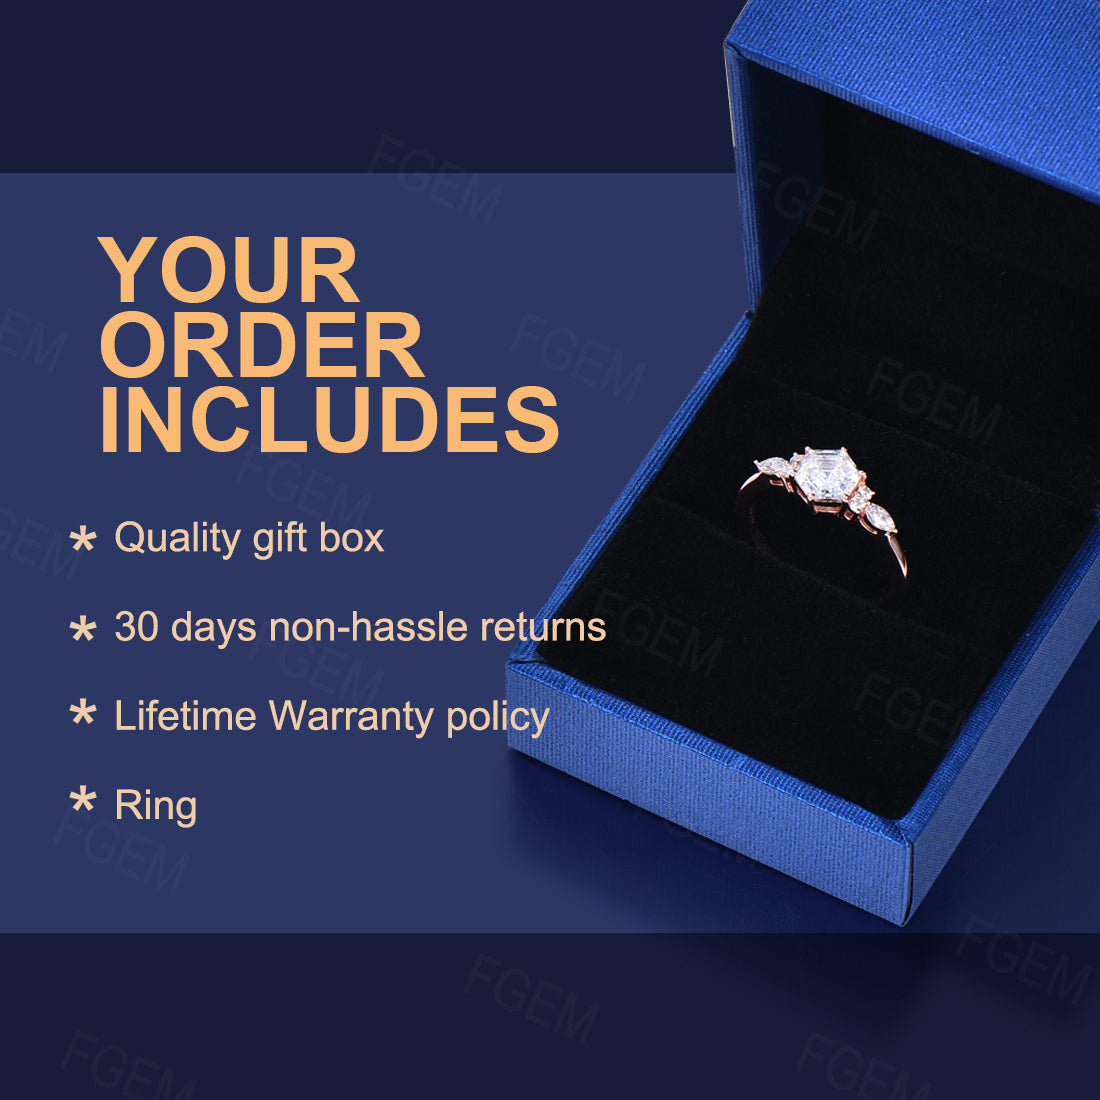 Nature Inspired Pear Lapis Lazuli Engagement Ring Set Natural Lapis Gold Leaf Ring Set 1.25CT Blue Lapis Jewelry Blue Sapphire Wedding Ring